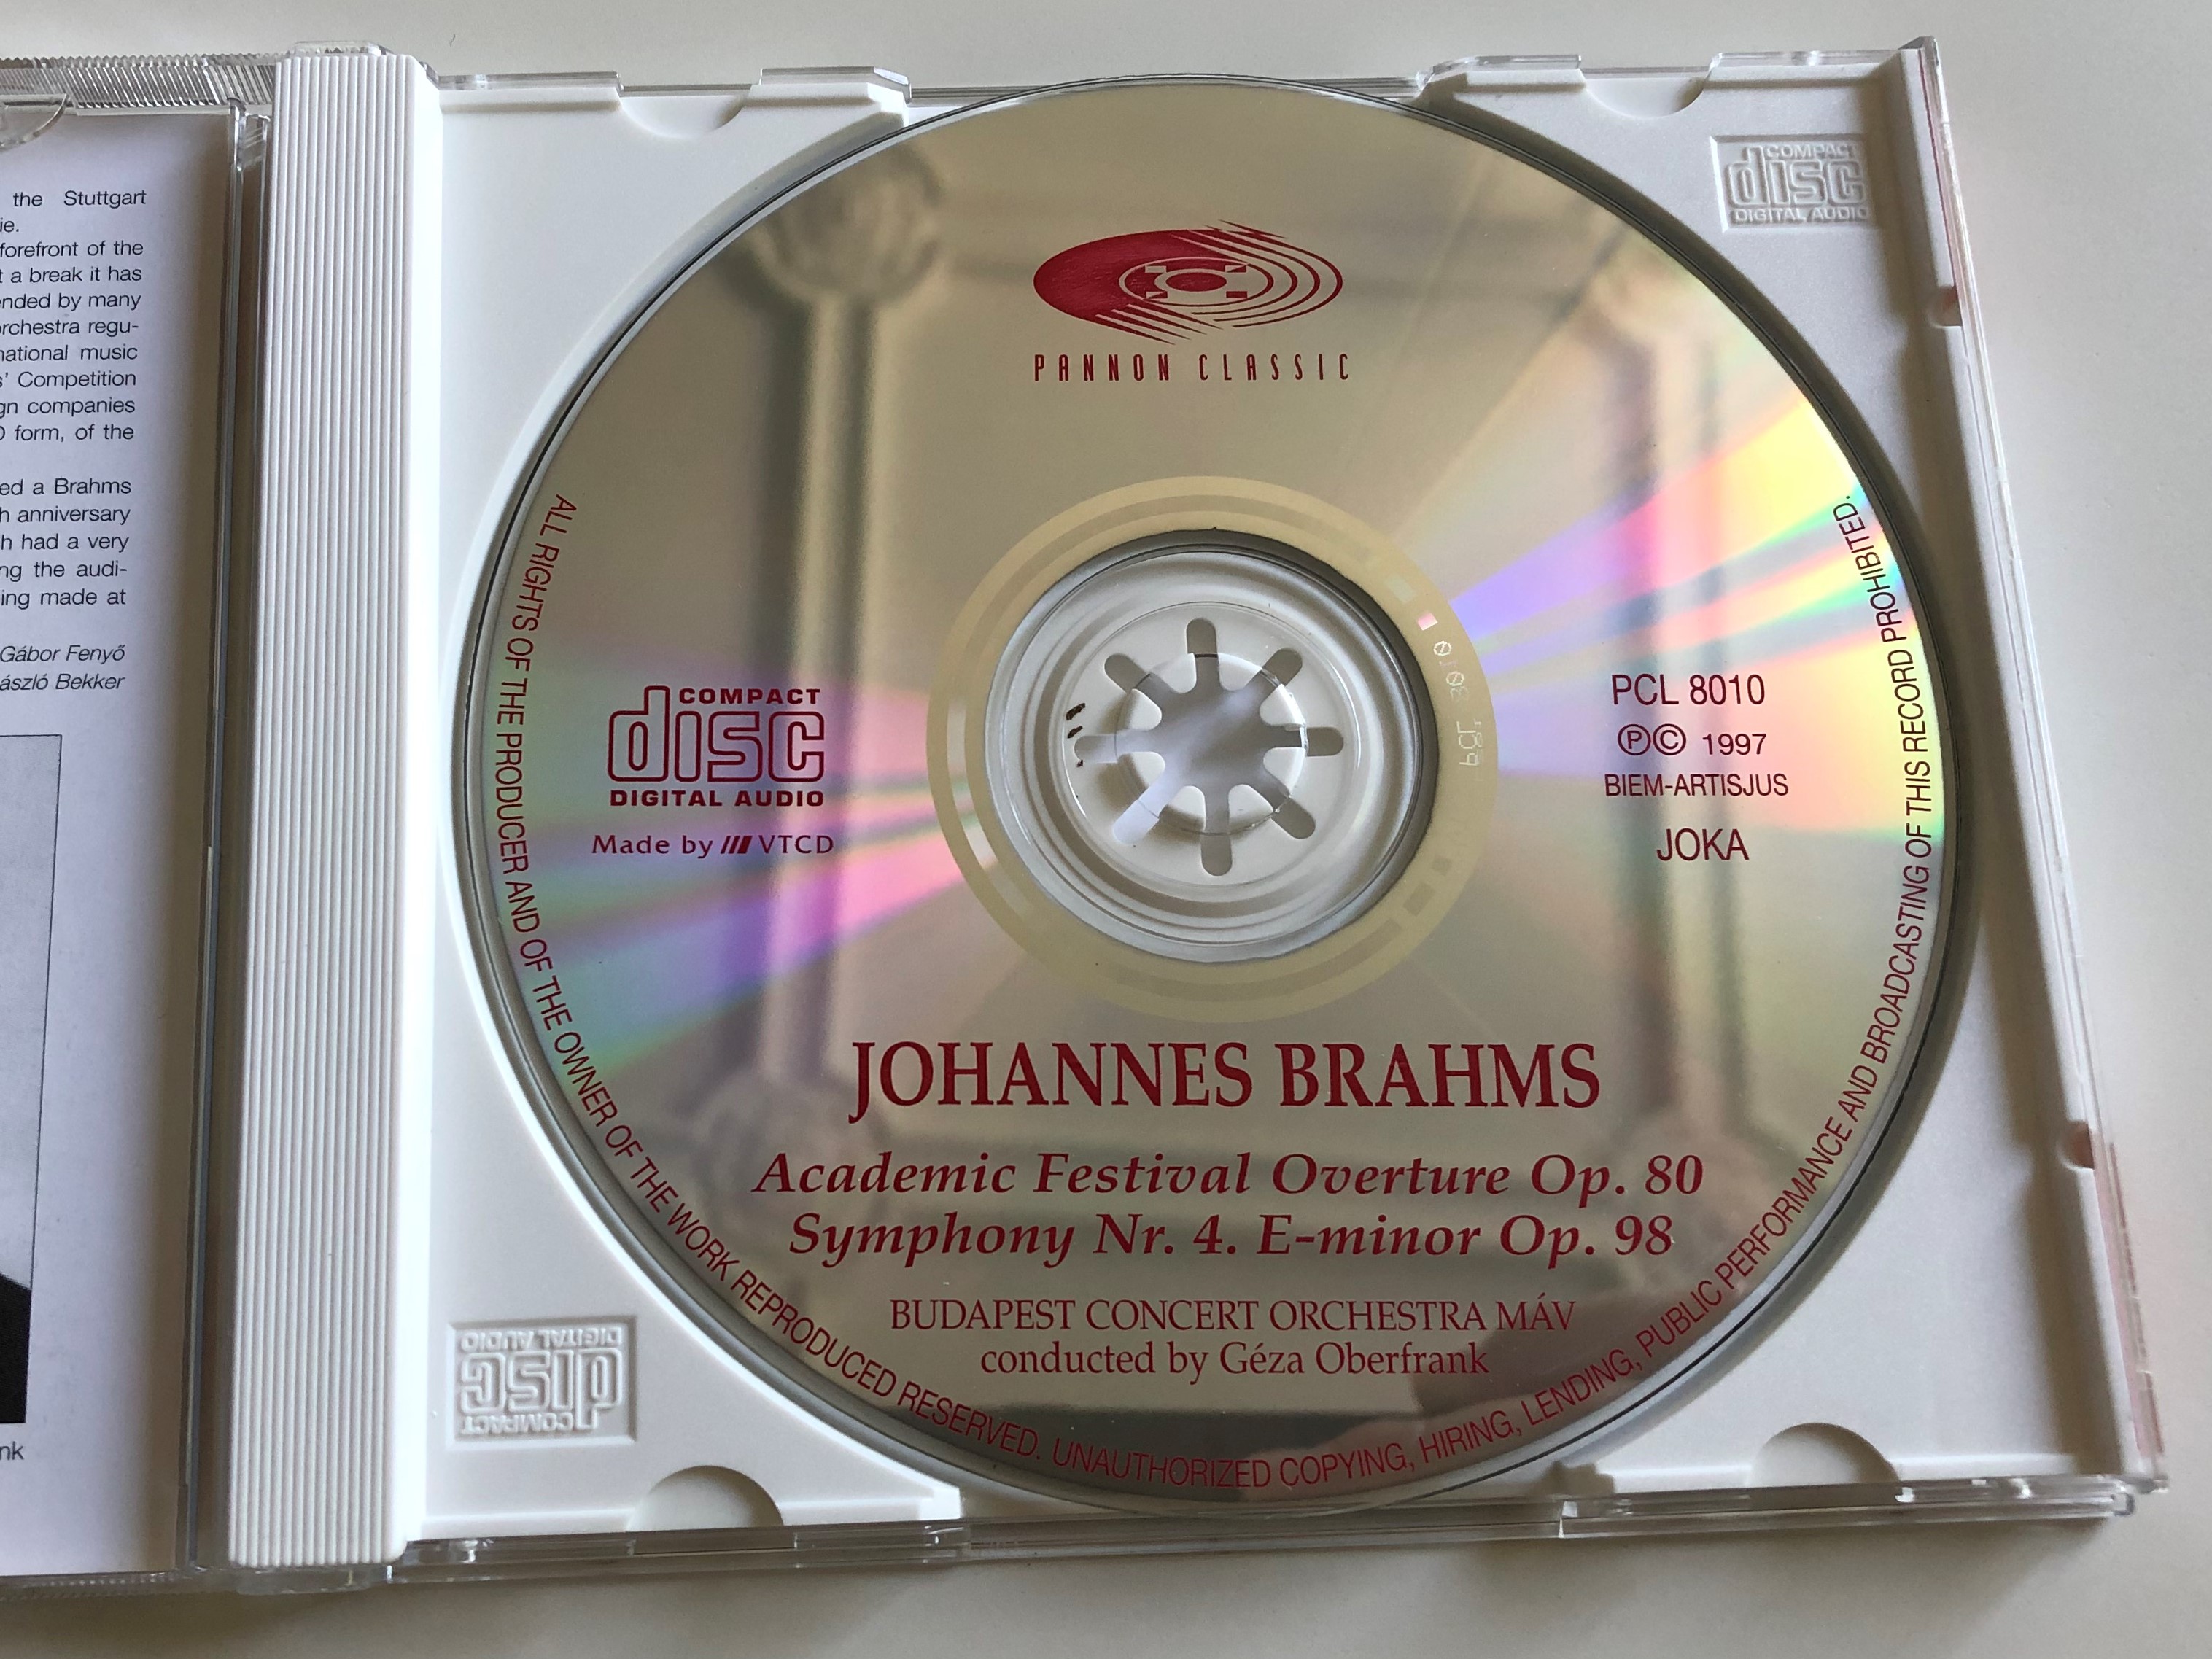 johannes-brahms-academic-festival-overture-op.-80-symphony-nr.-4-e-minor-op.98-brahms-festival-1997-budapest-concert-orchestra-m-v-conducted-by-g-za-oberfrank-pannon-classic-audio-cd-1997-live-recording-6-.jpg